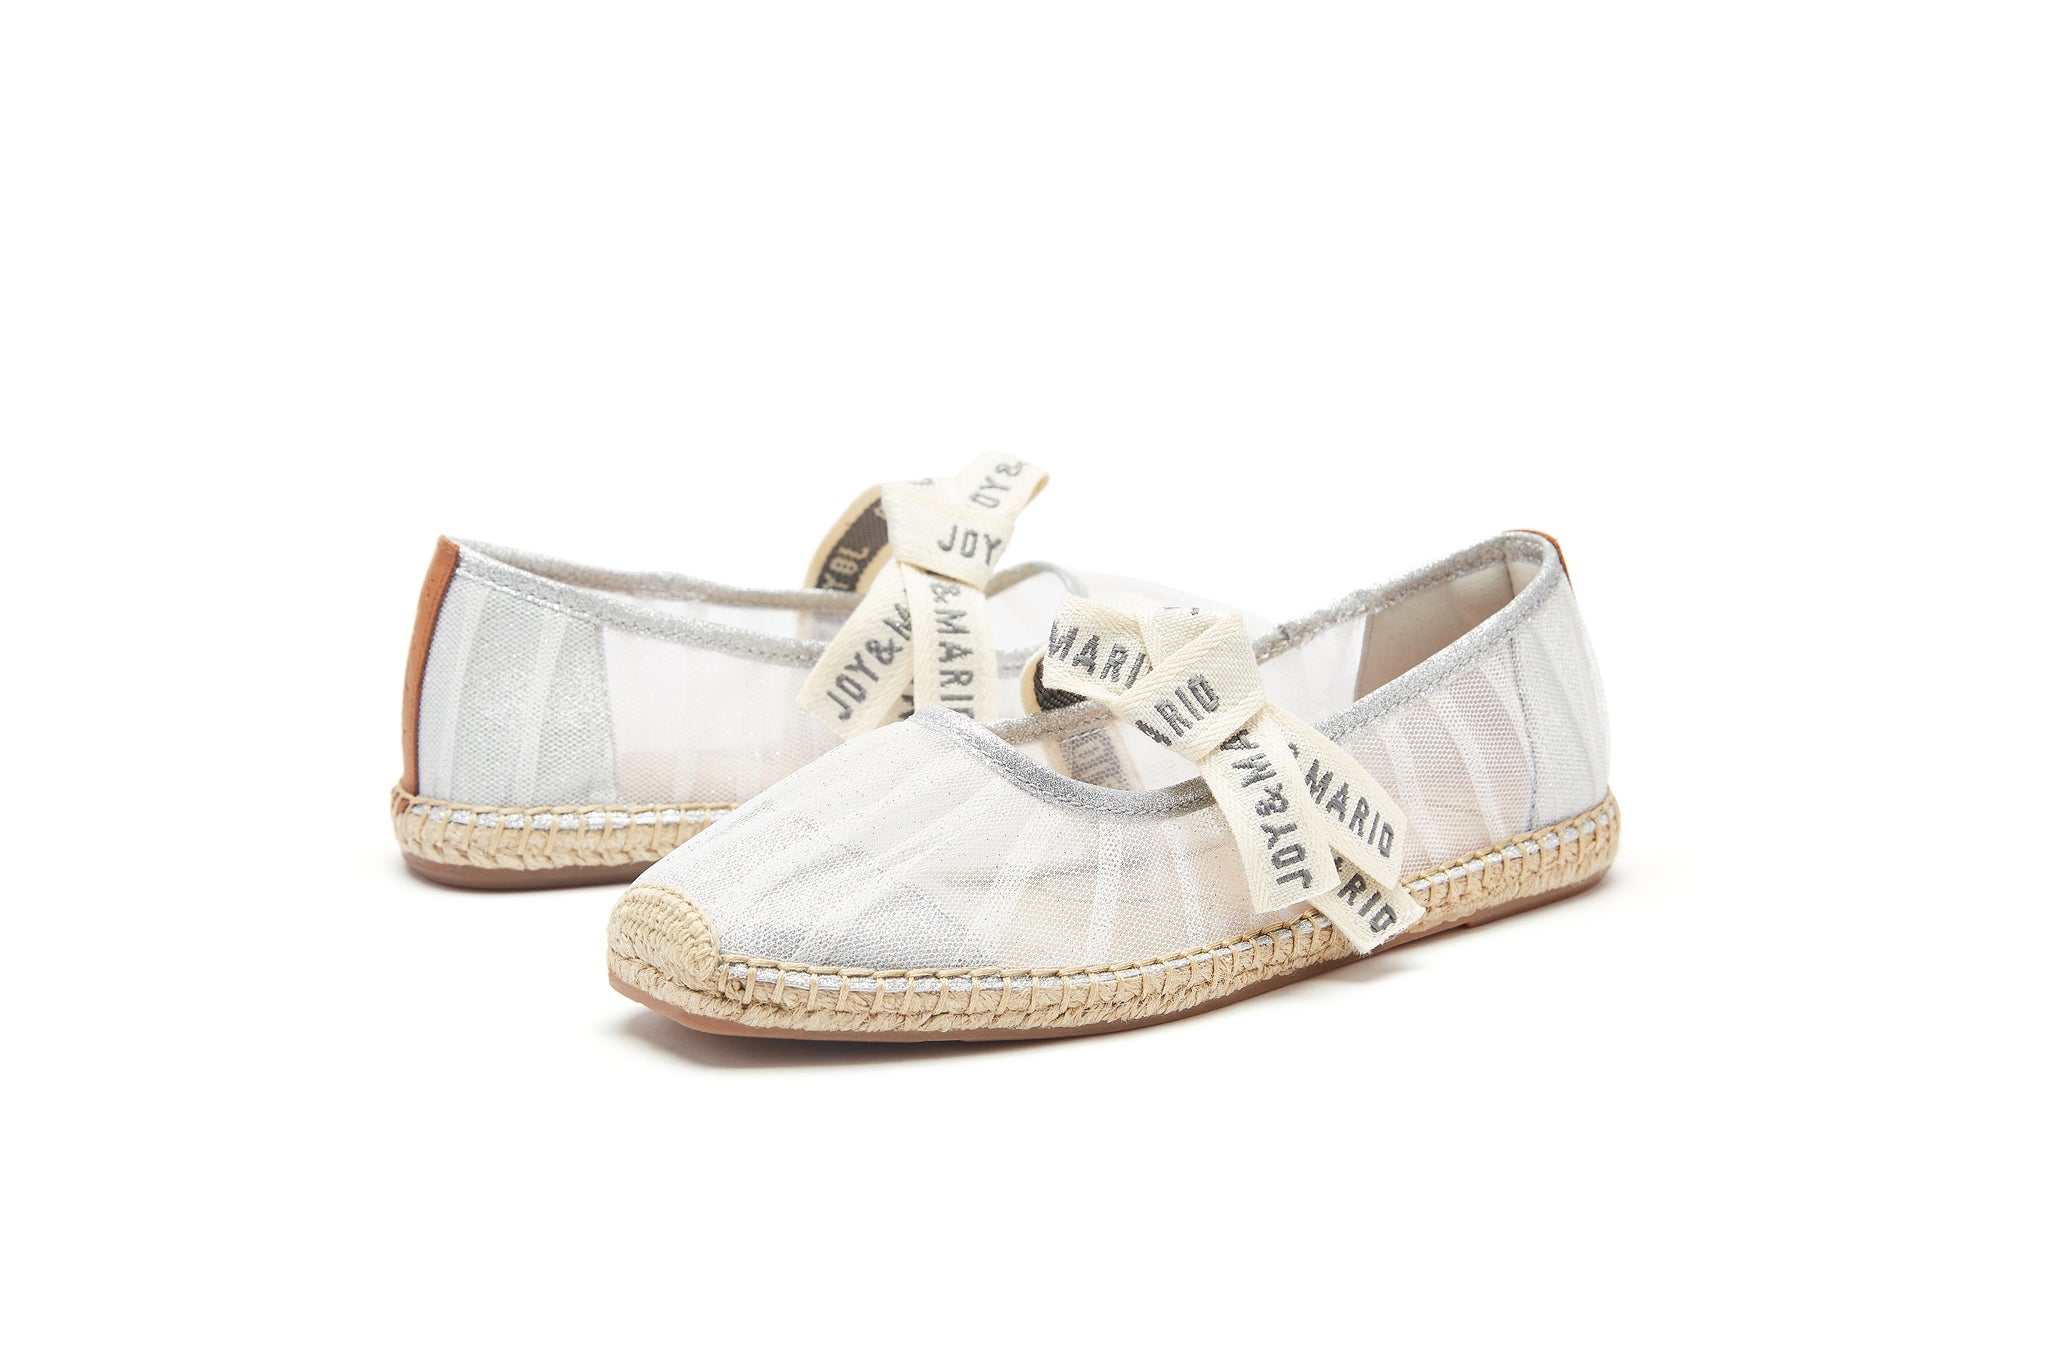 JOY&MARIO Handmade Women’s Slip-On Espadrille Mesh Loafers Flats in Silver-05023W